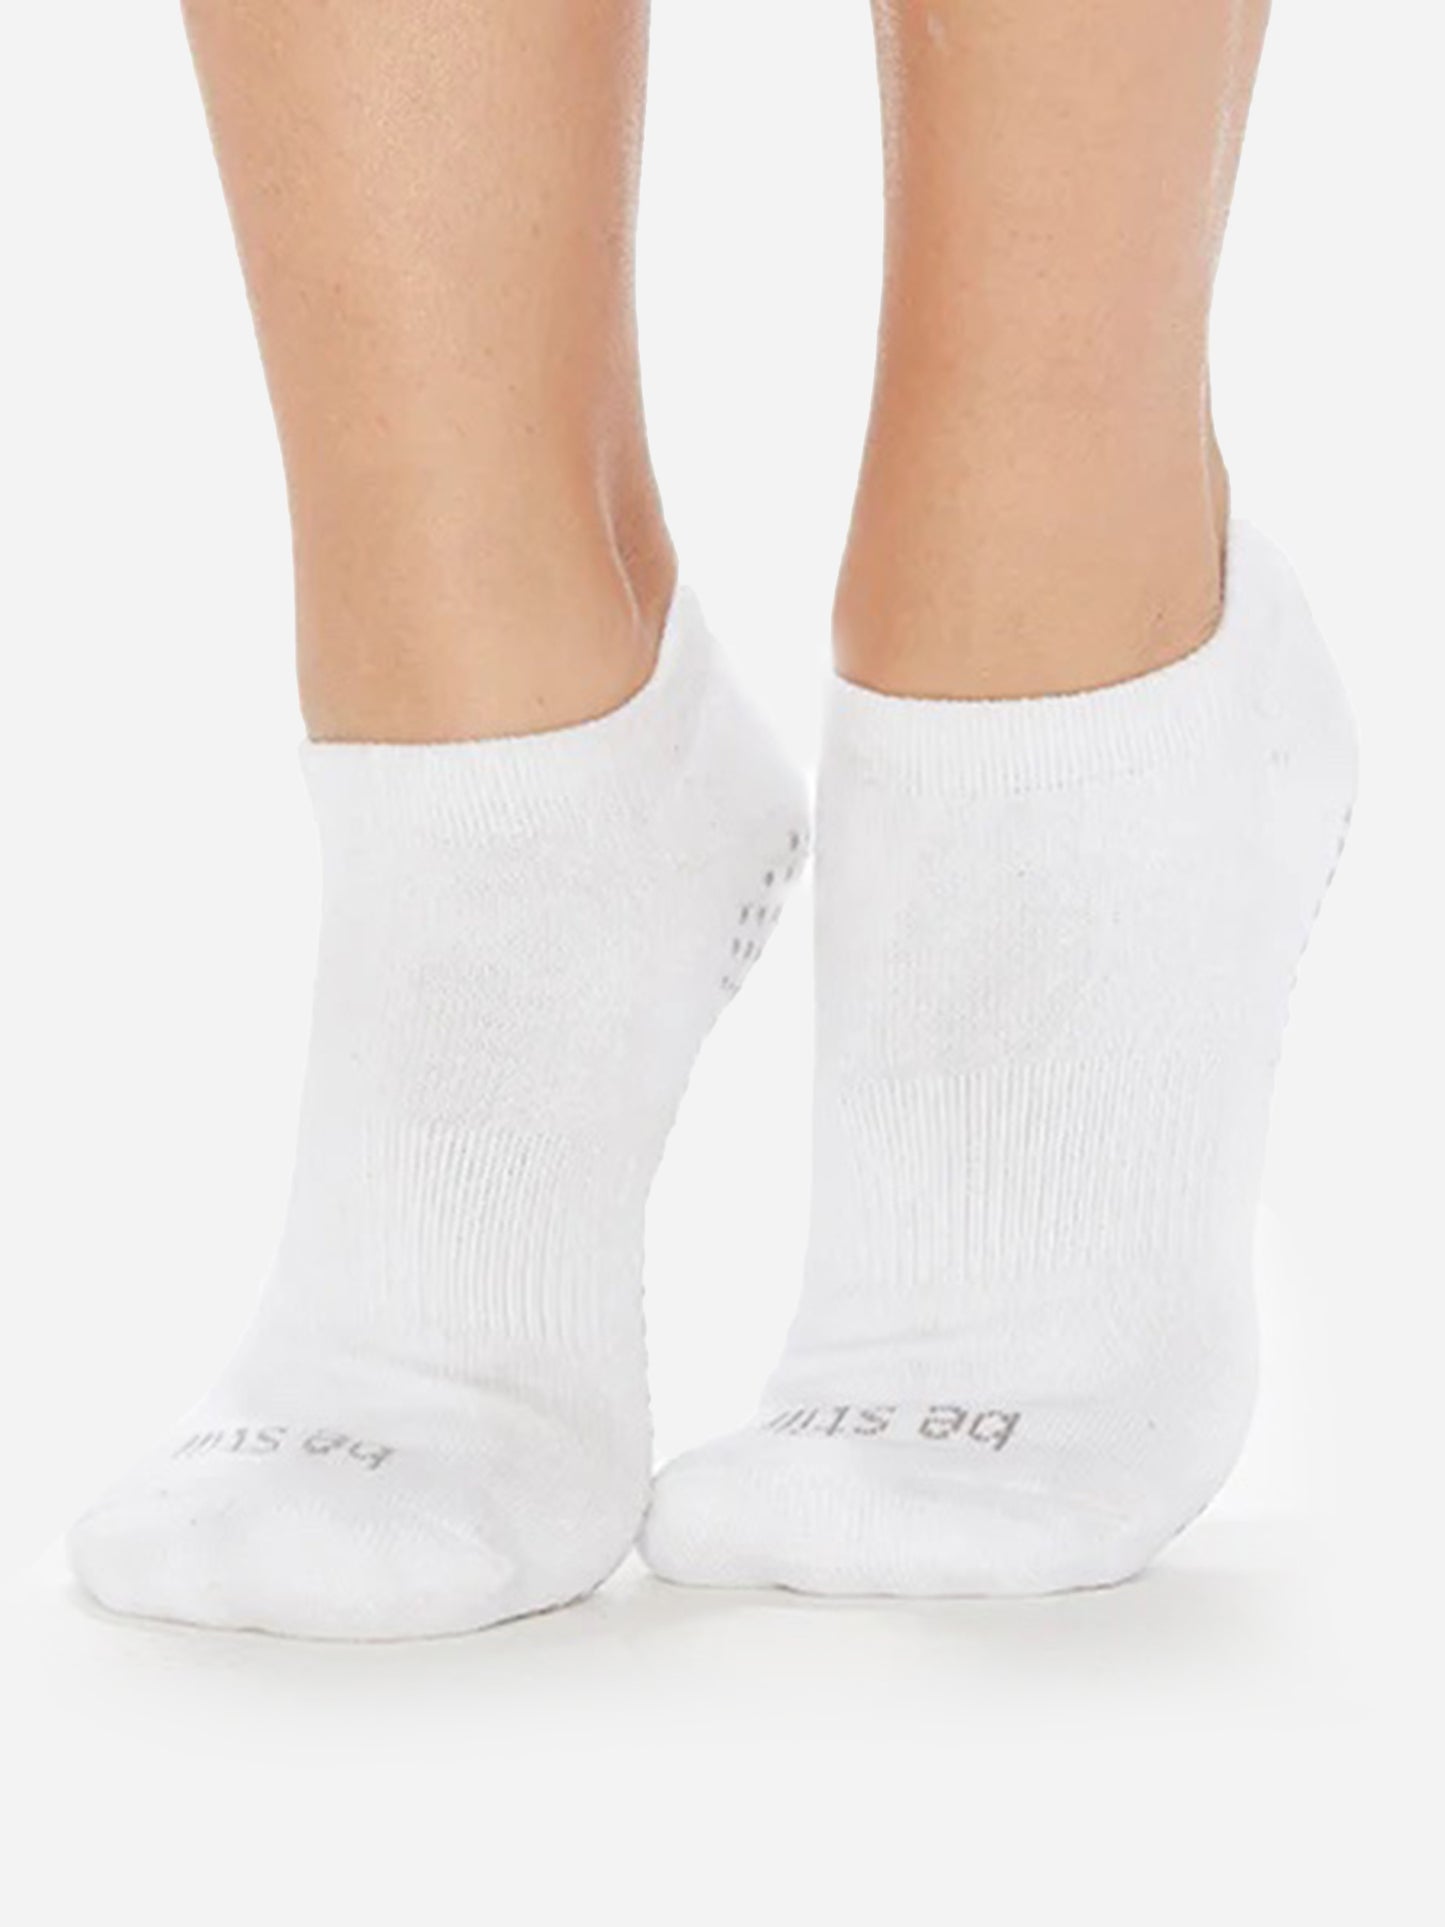 Sticky Be Socks Women's Be Still Grip Socks